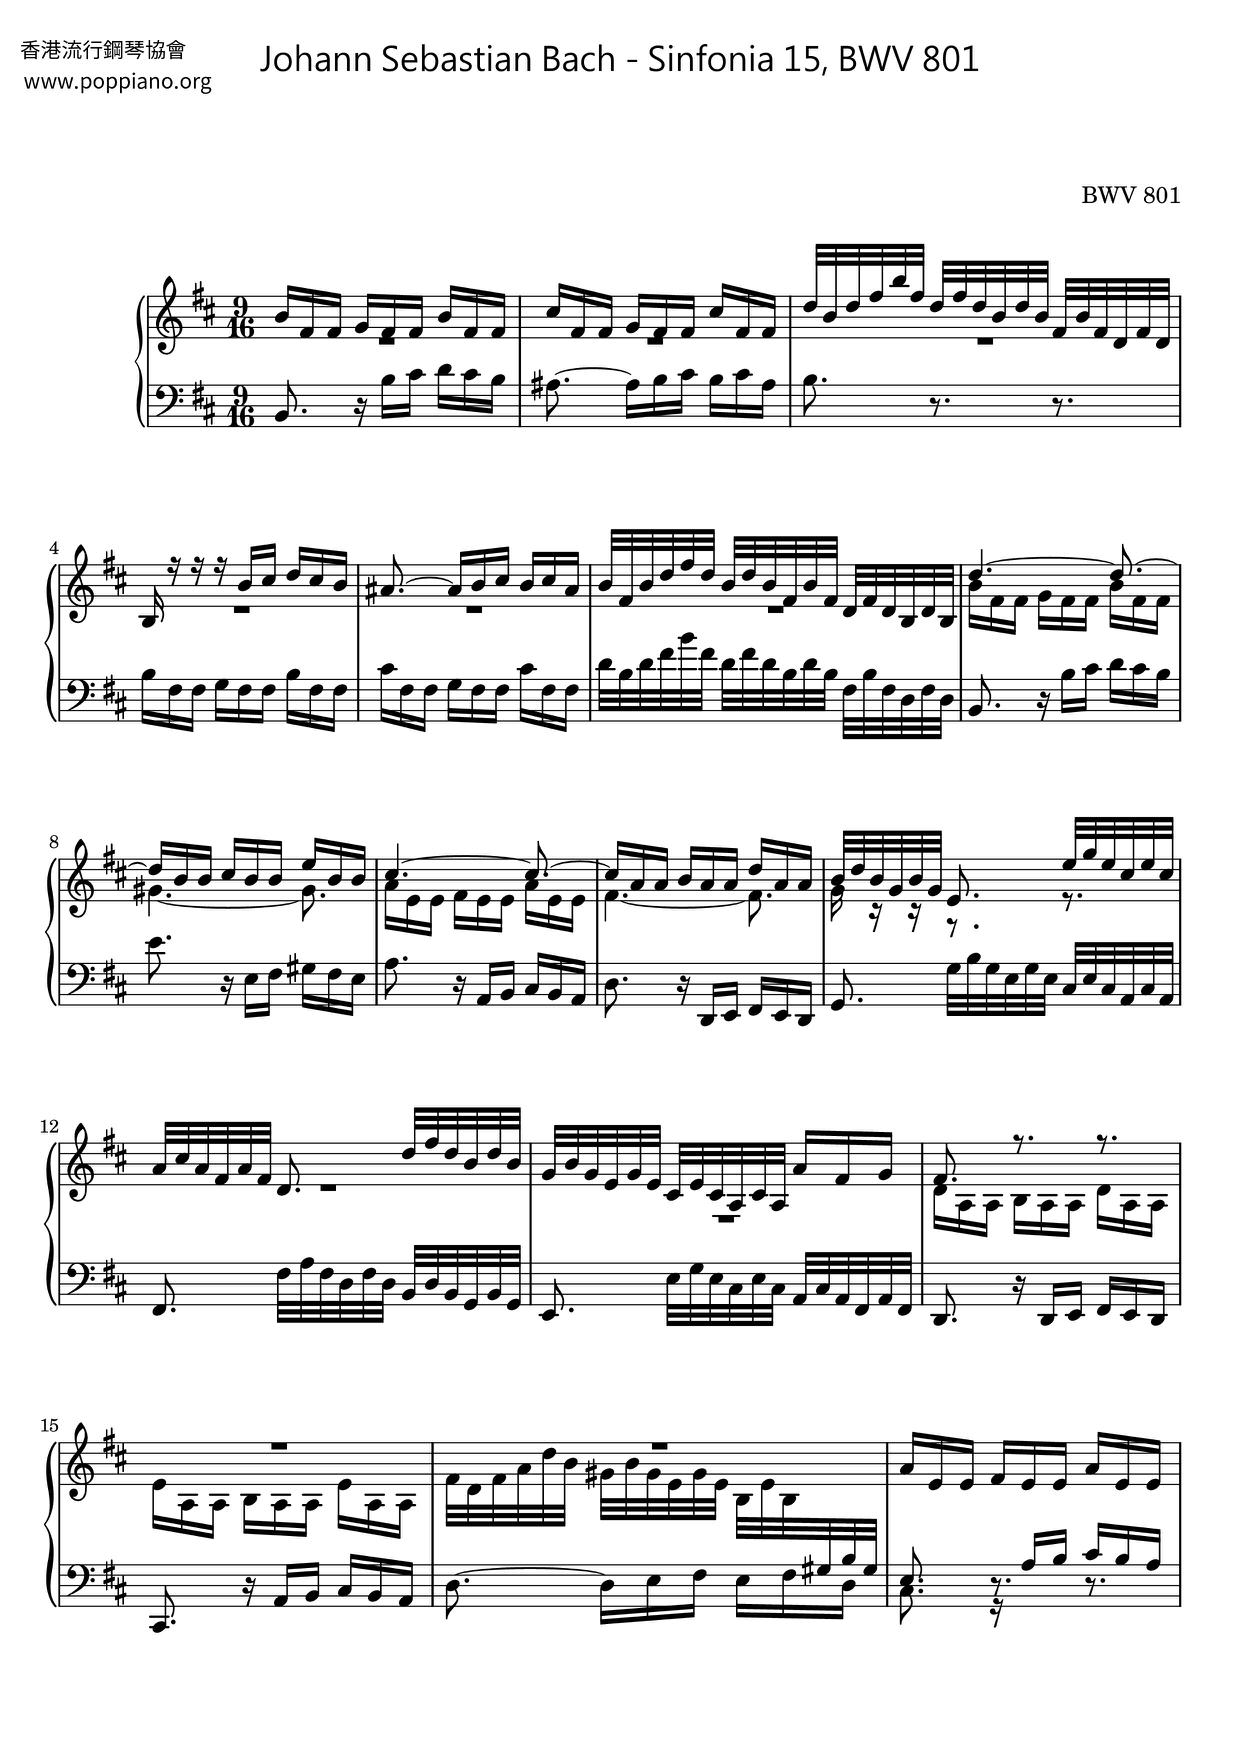 Sinfonia 15, BWV 801 Score